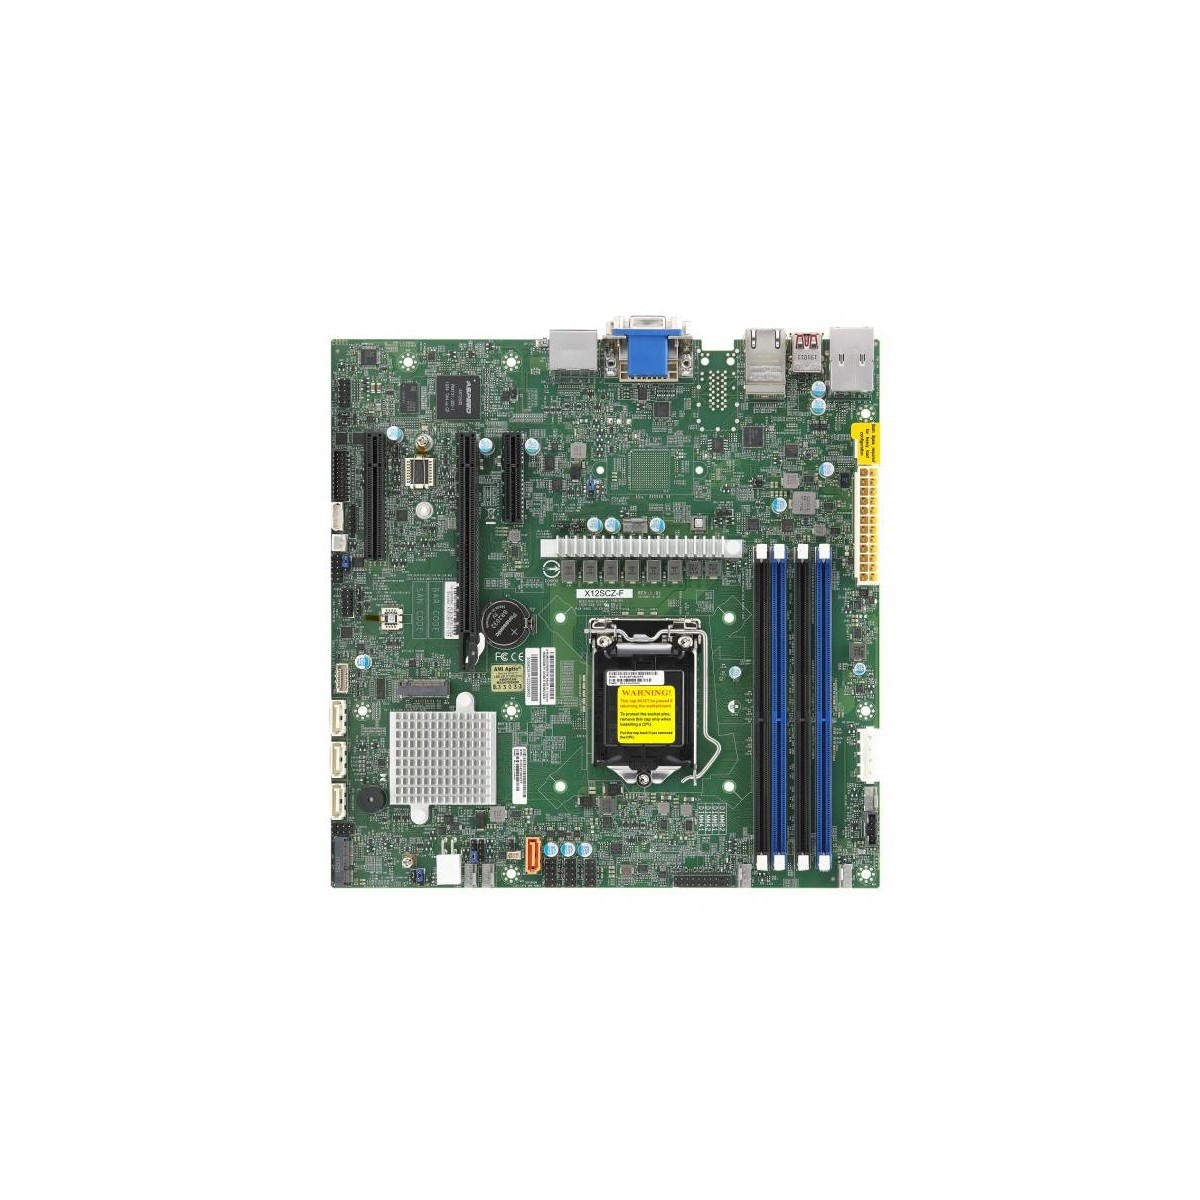 Supermicro mainboard sever MBD-X12SCZ-F-O,  E-2200 Processor, Intel C246 controller for 5 SATA3 (6 Gbps) ports RAID 0,1,5,10, 1x